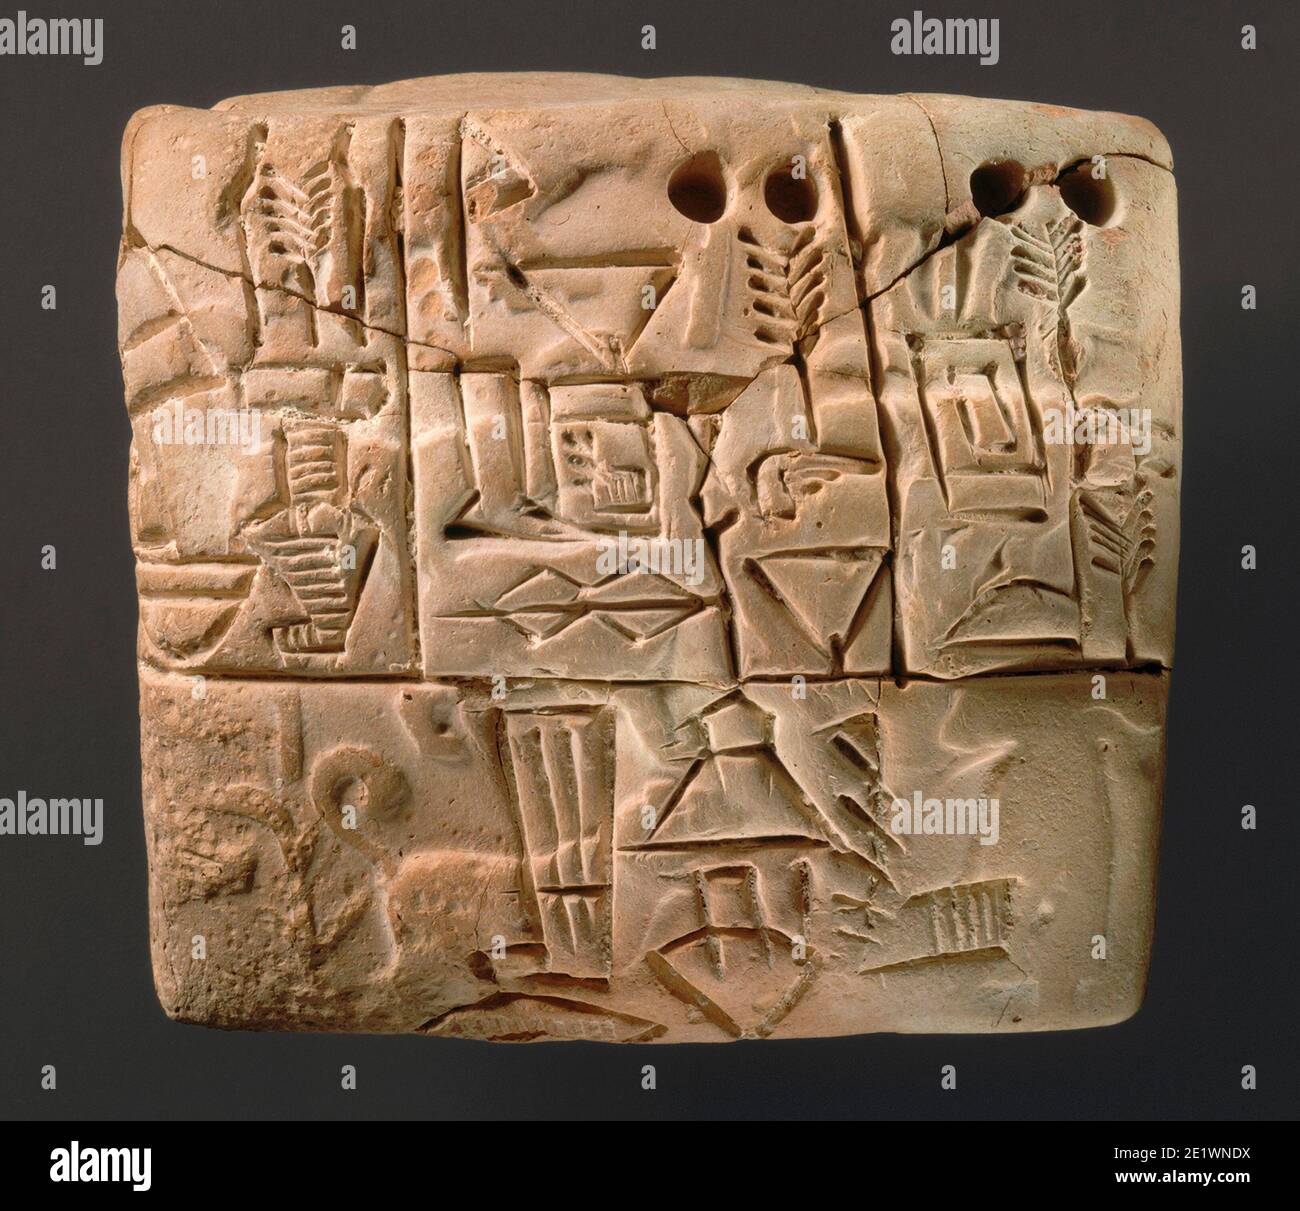 6687. Cuneiform tablet from Uruk, Mesopotamia, dating c. 3100-2900 BC. Stock Photo